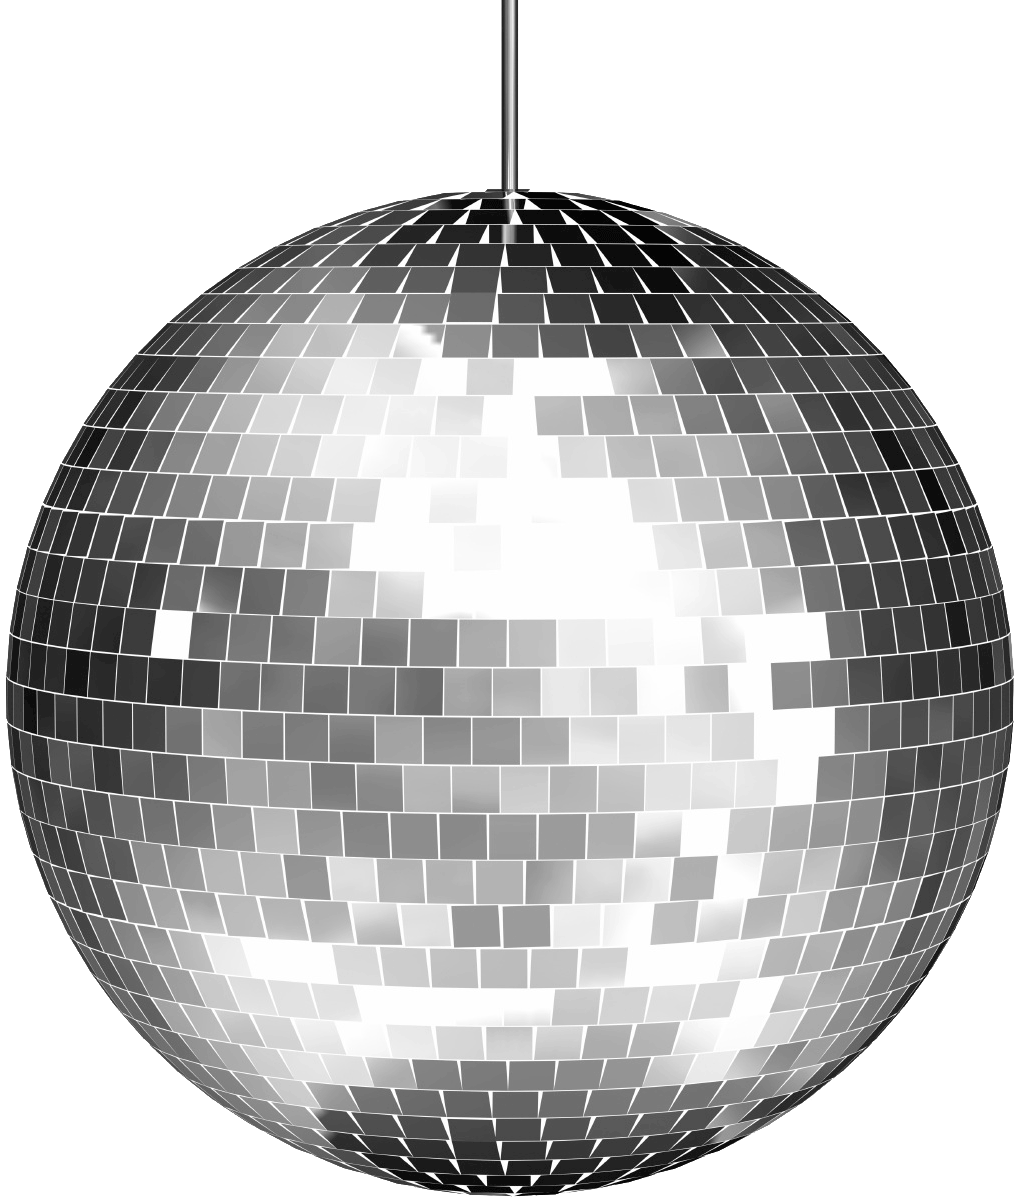 disco ball isolated: disco .